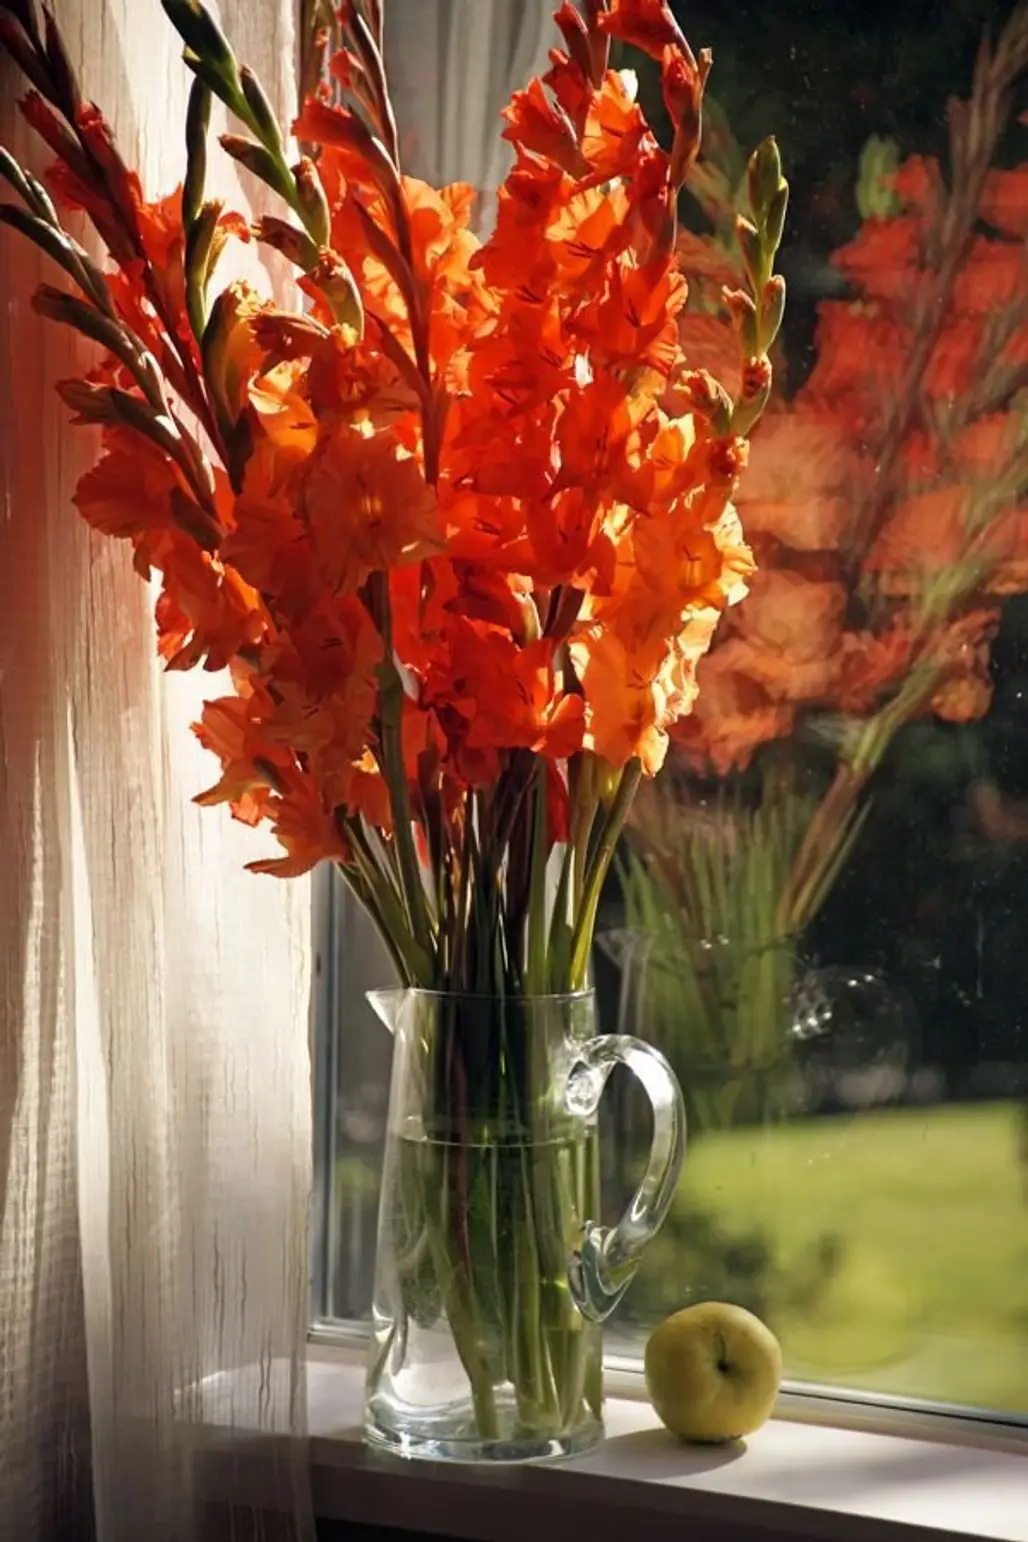 Gladiolus Make Such a Beautiful Arrangement